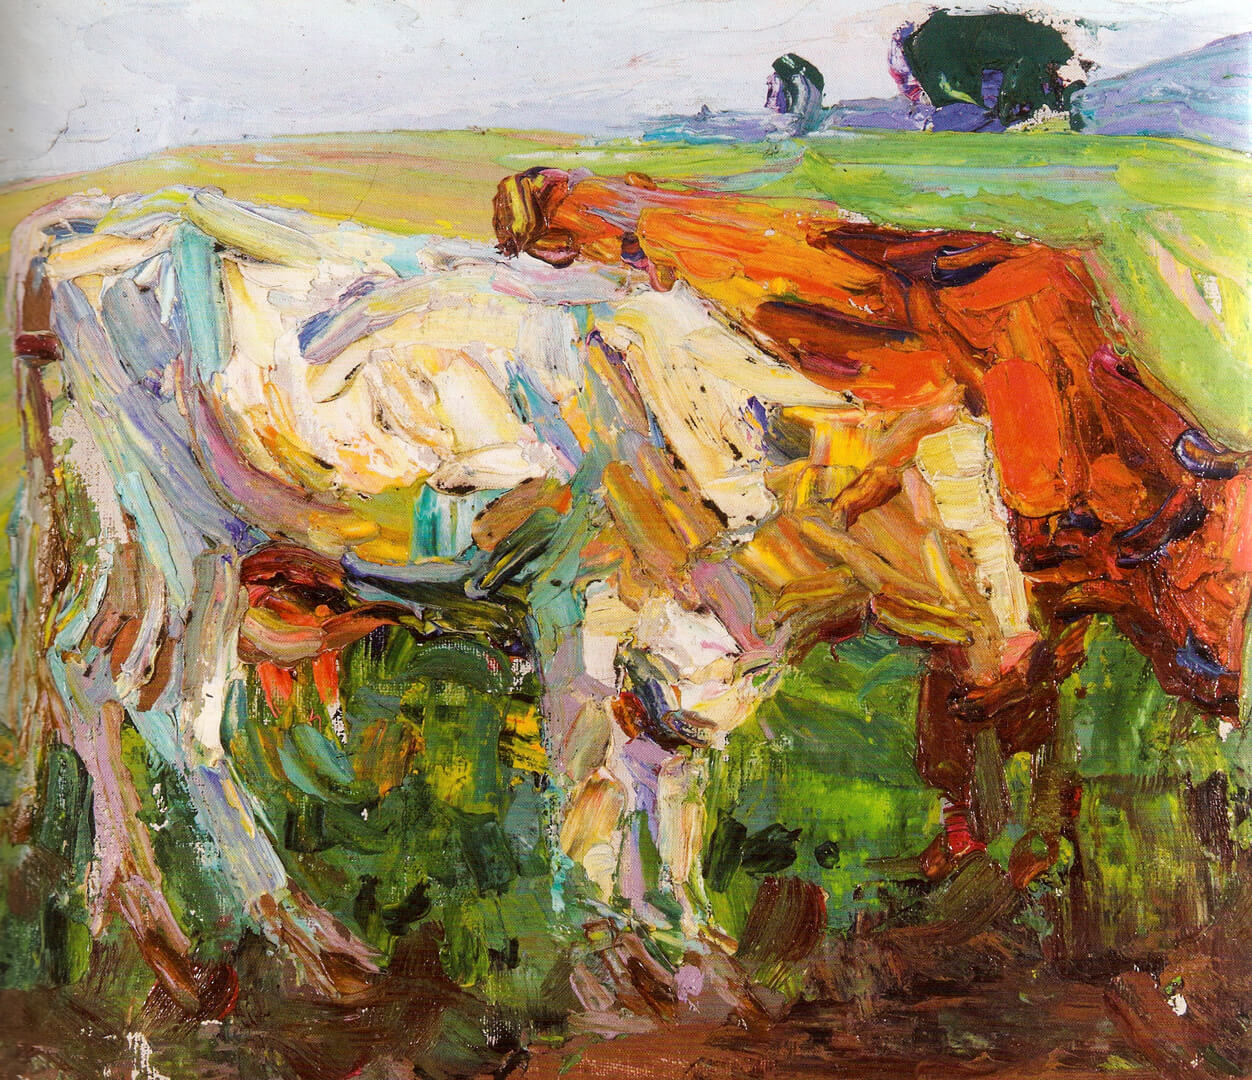 Kathleen Munn, Untitled (Study of Cows), c. 1910